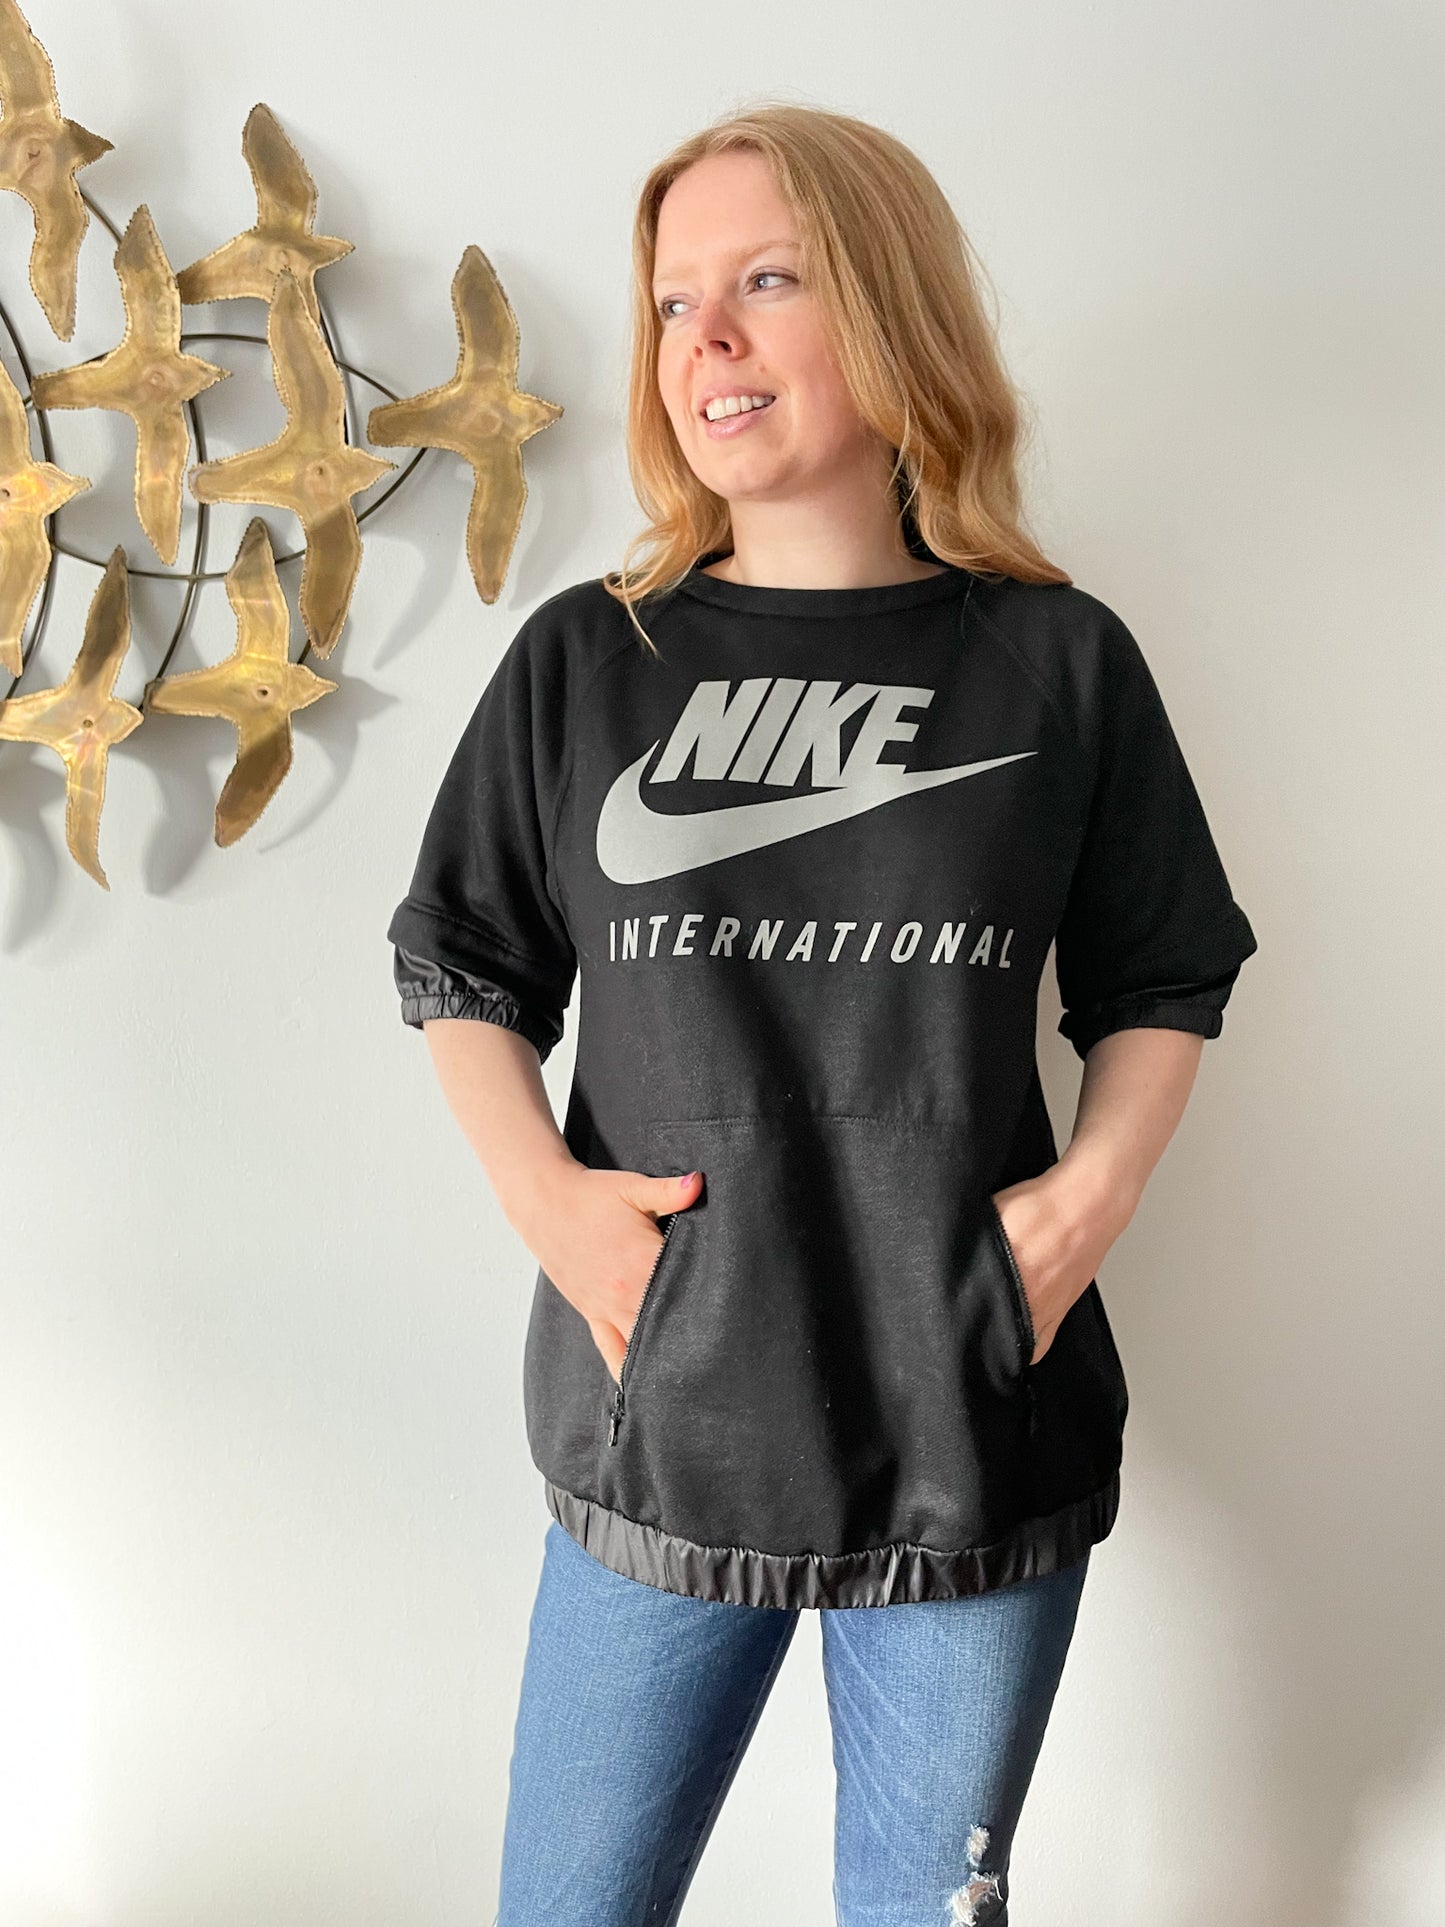 Nike Black Reflective Half Sleeve Sweater Top - M/L